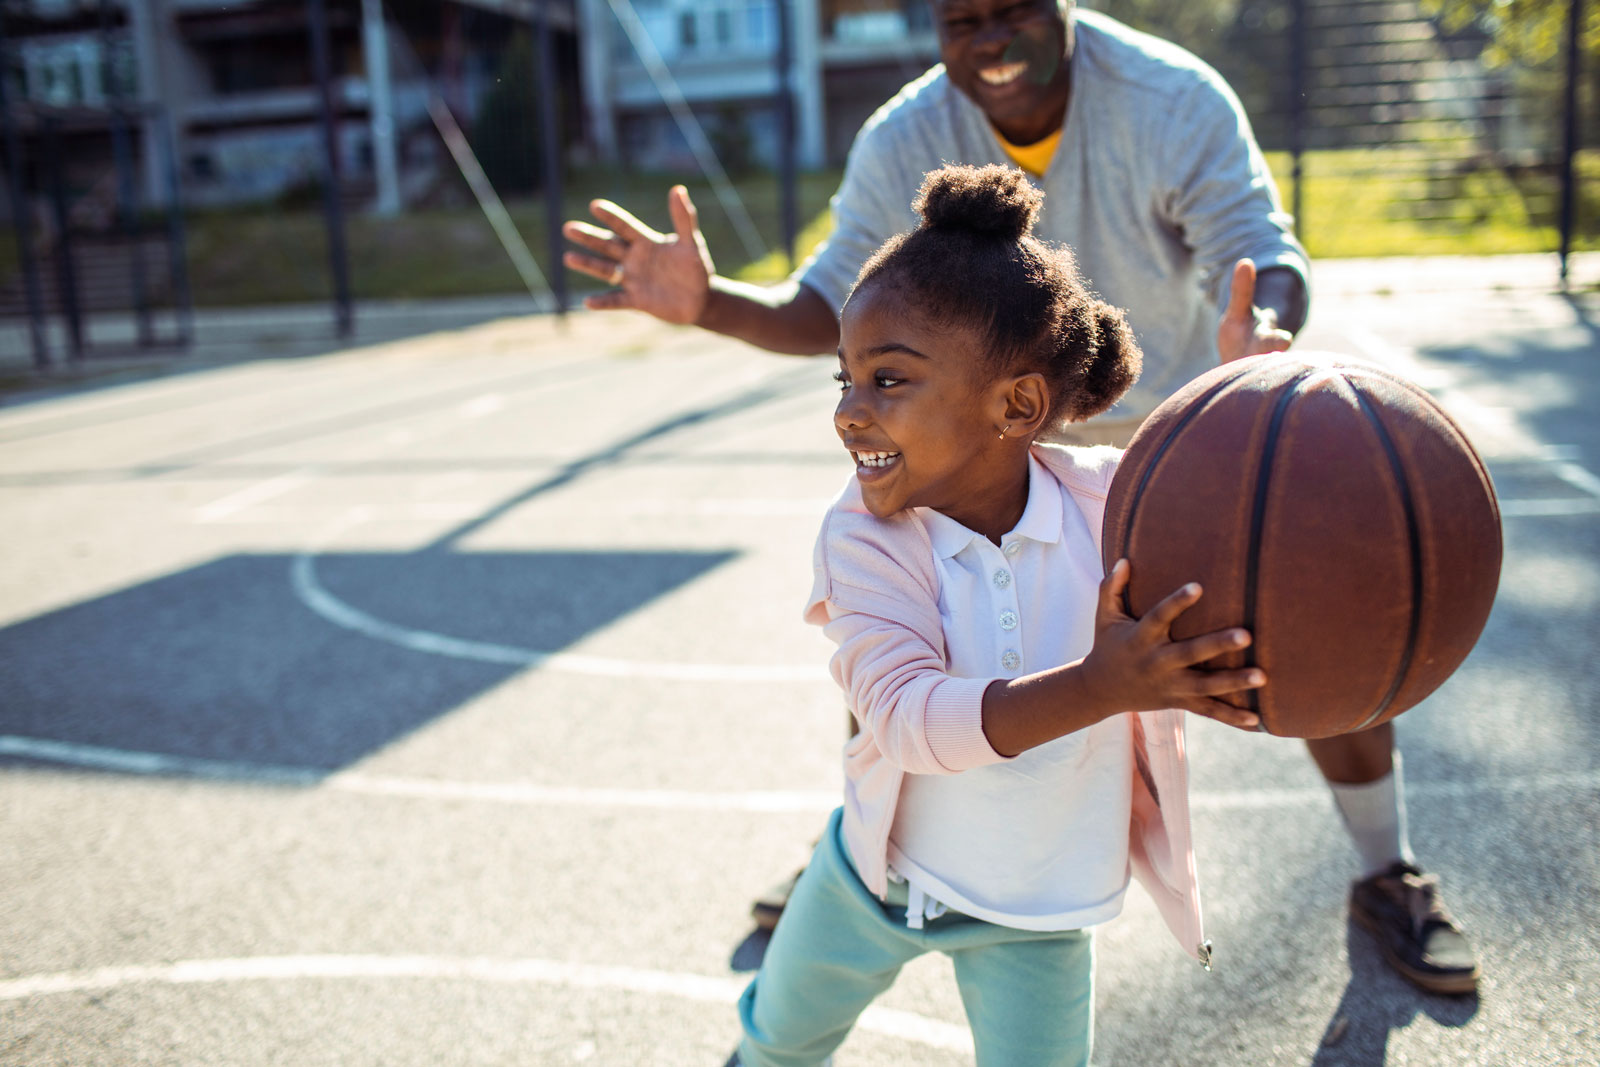 Girl playing basketball with her grandpa.